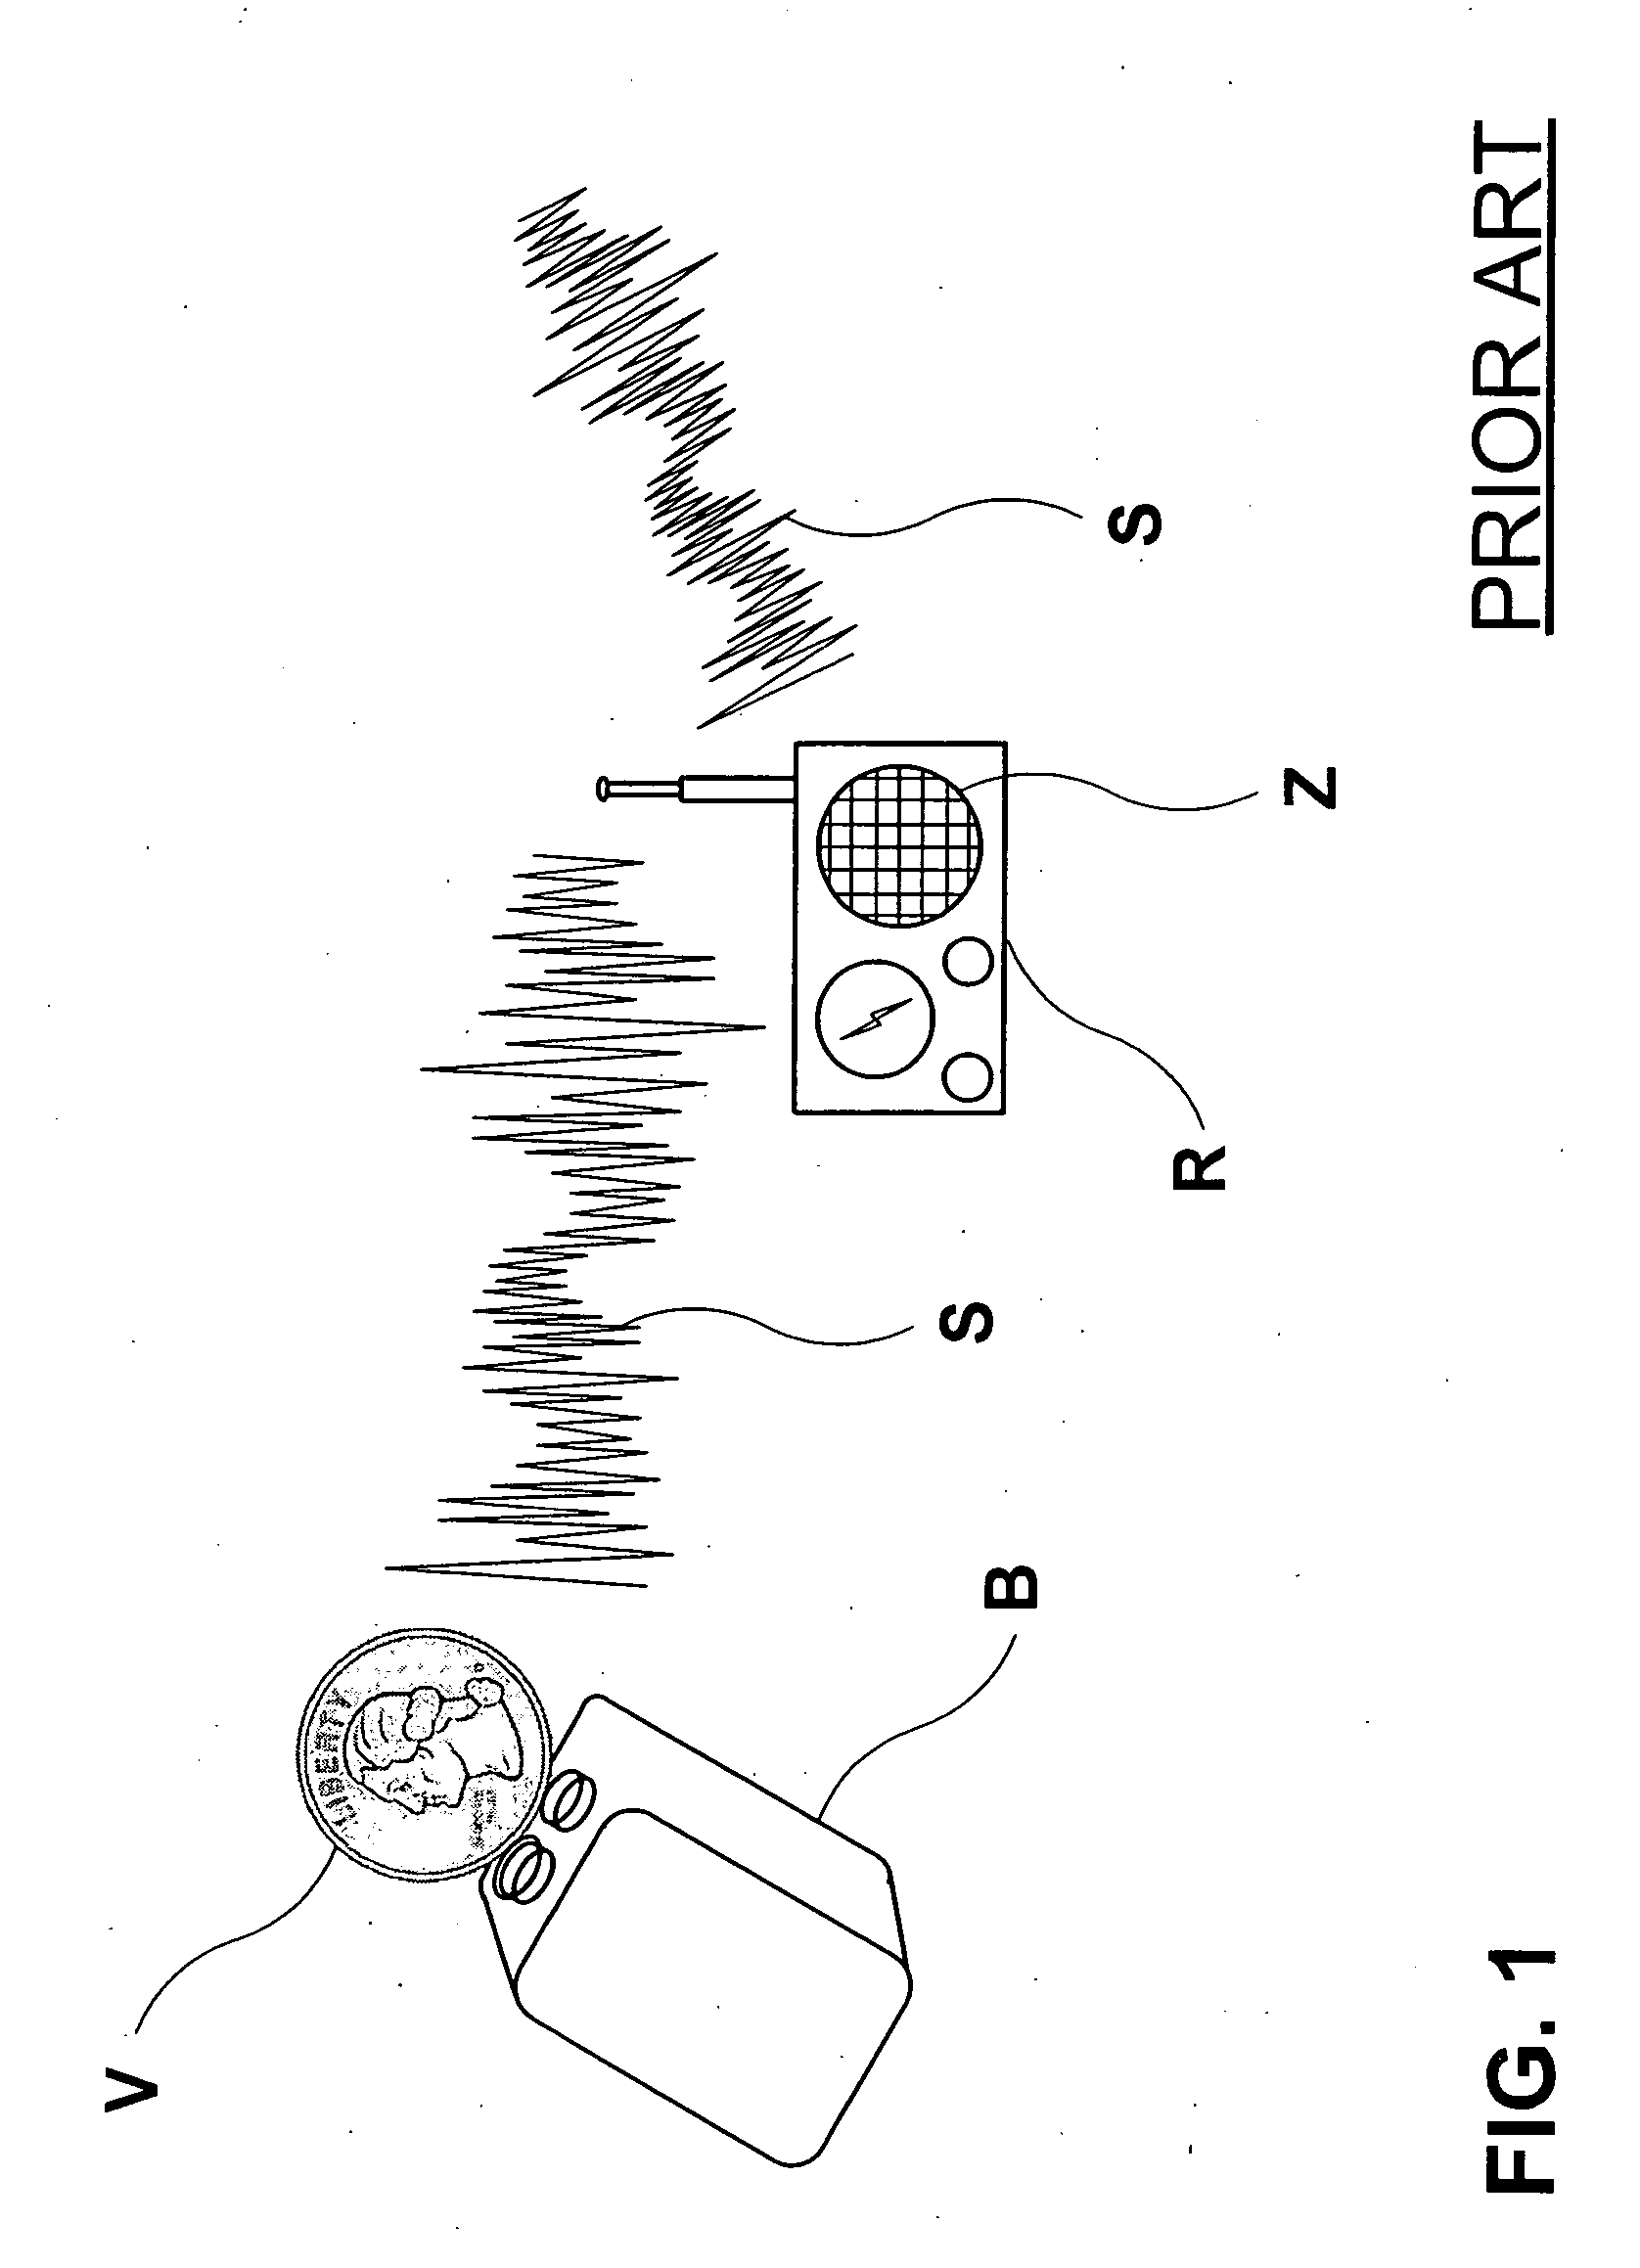 Digital radio system